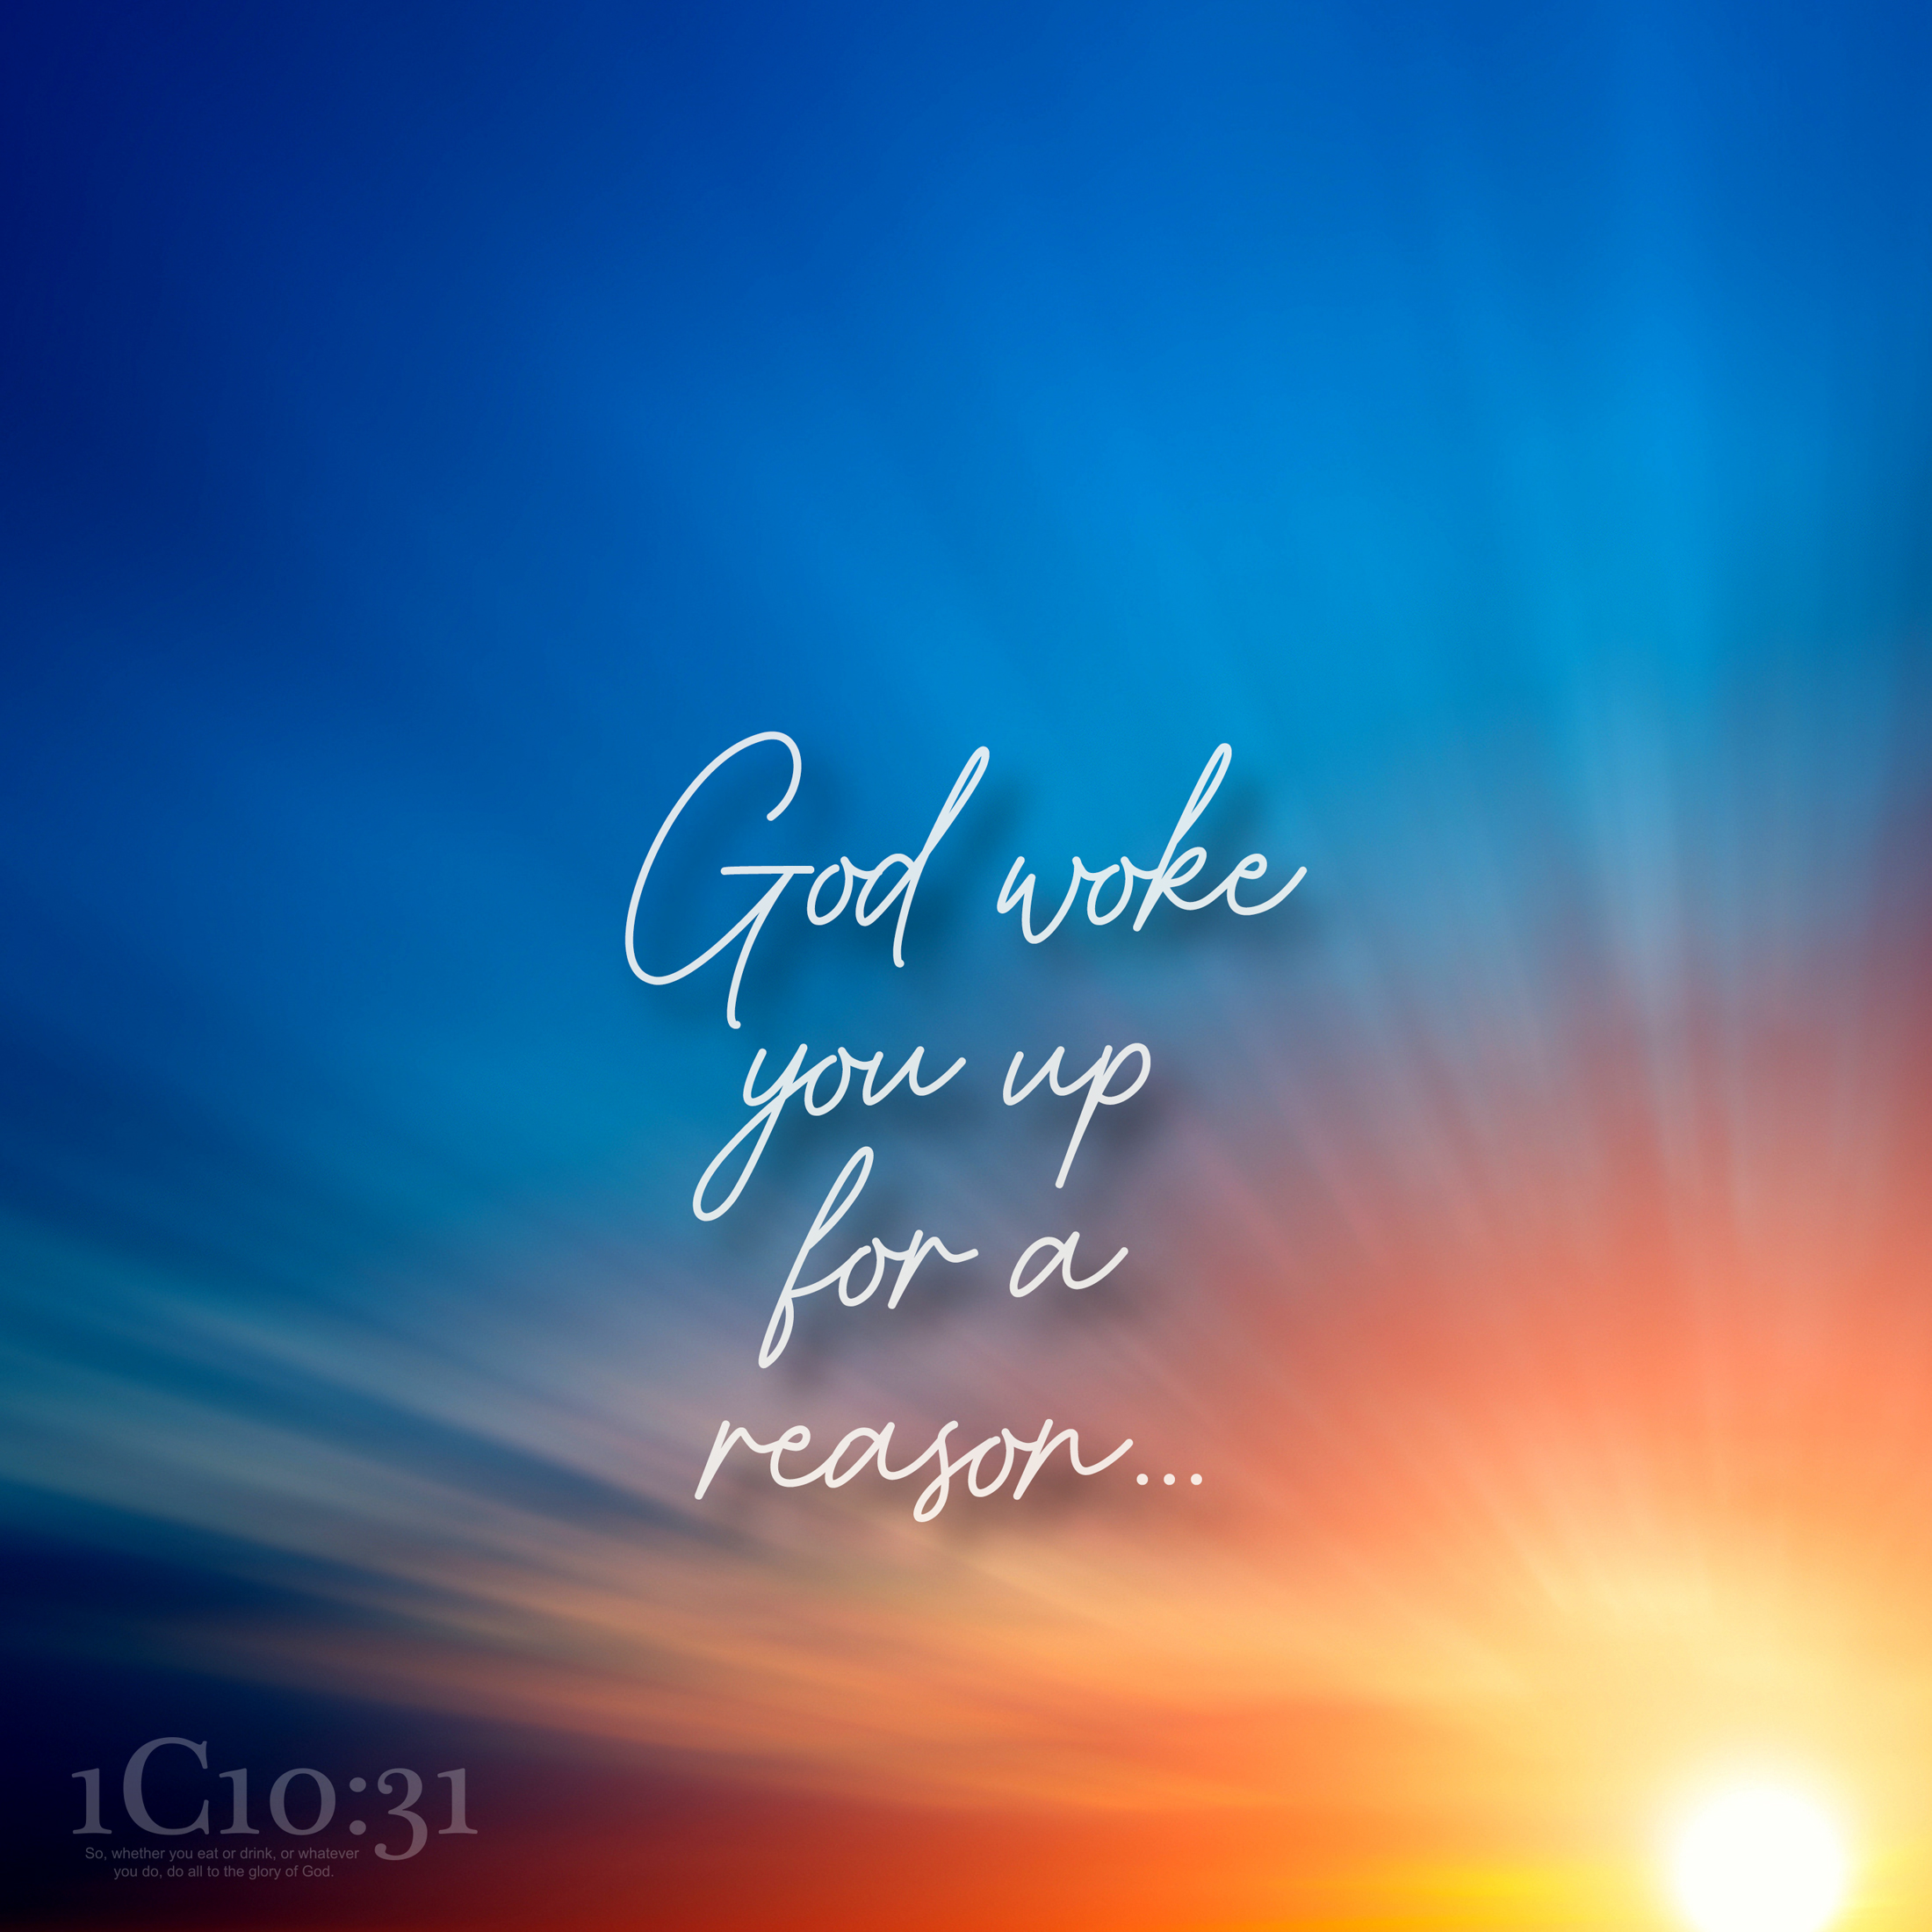 God woke you up for a reason